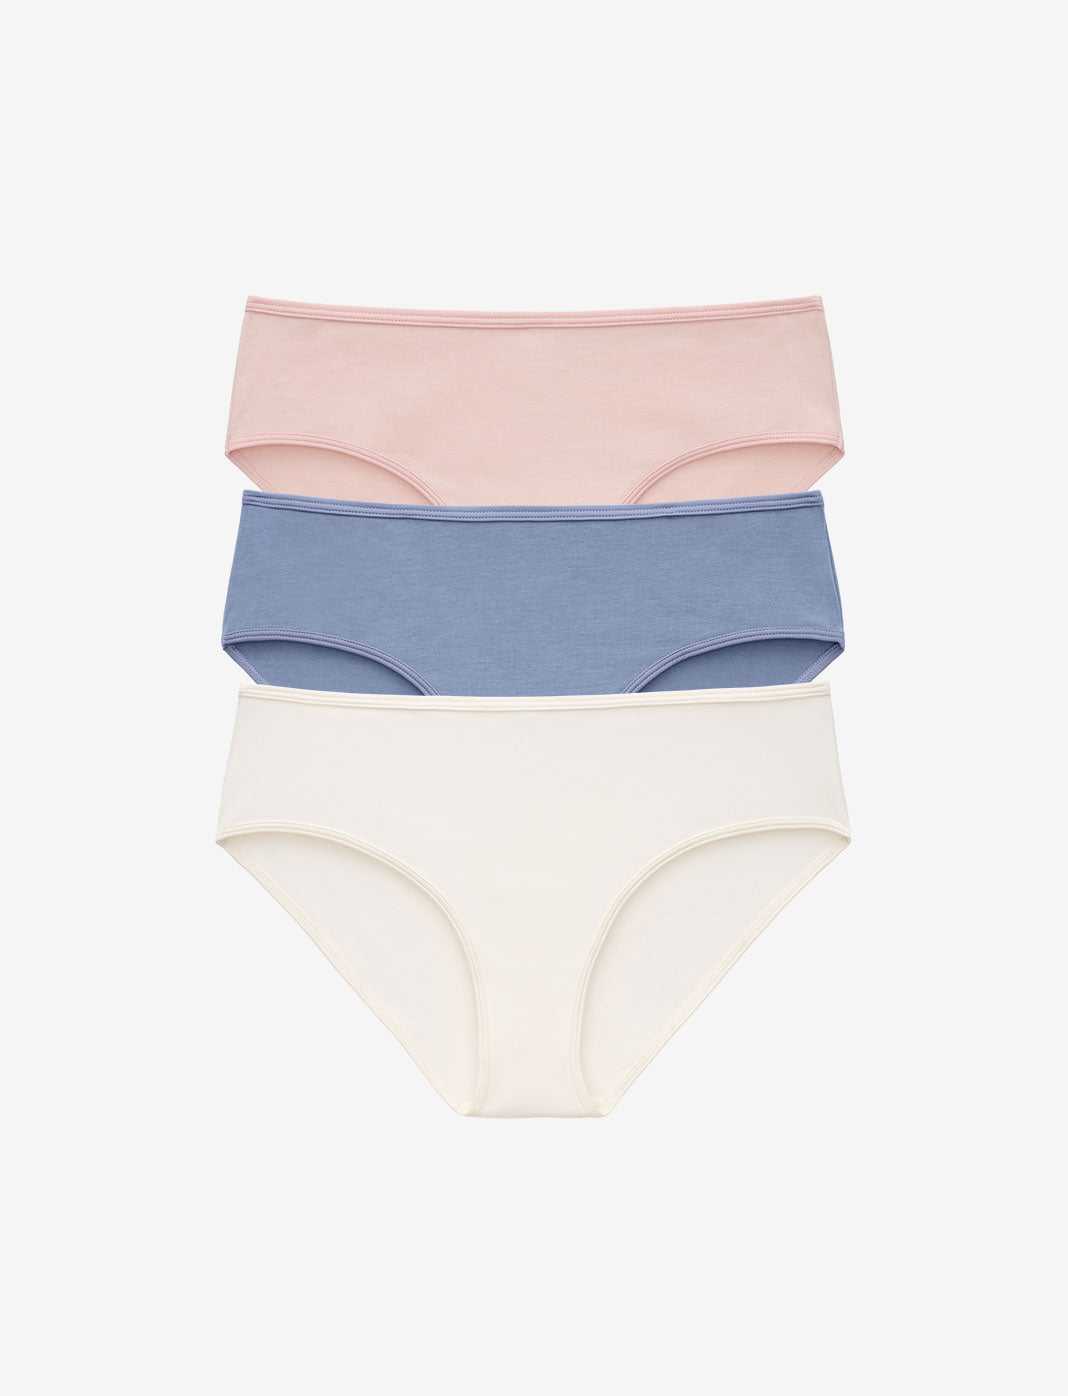 PRIME LOVE® Women's Underwear Hipster Panty, Sexy Panties for Women, Ladies  Underwear, Girls Panties